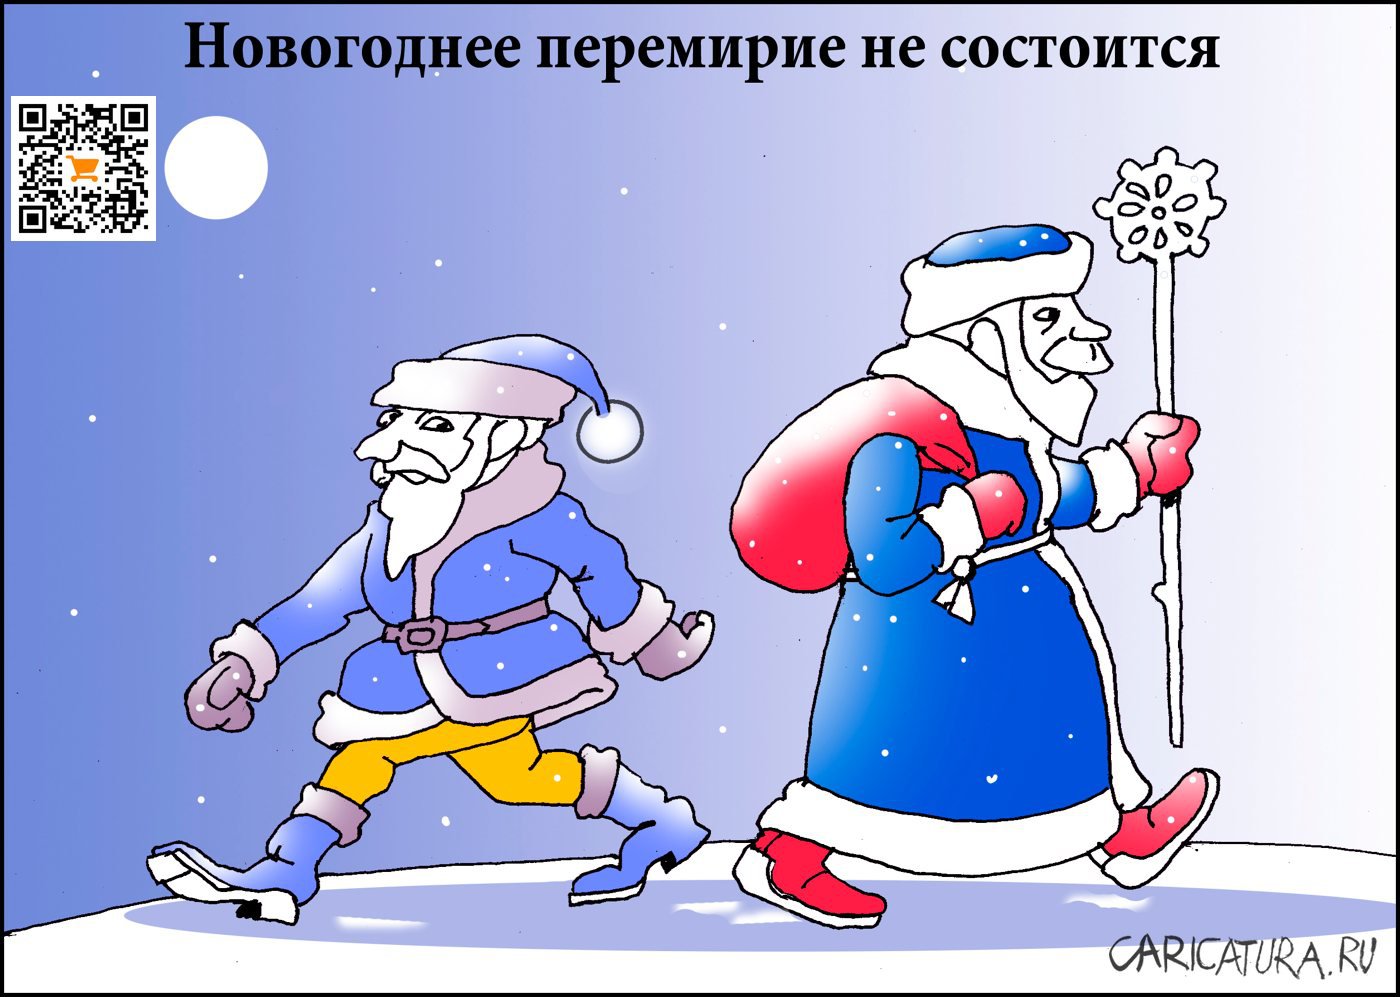 Карикатура "Перемирие", Александр Уваров